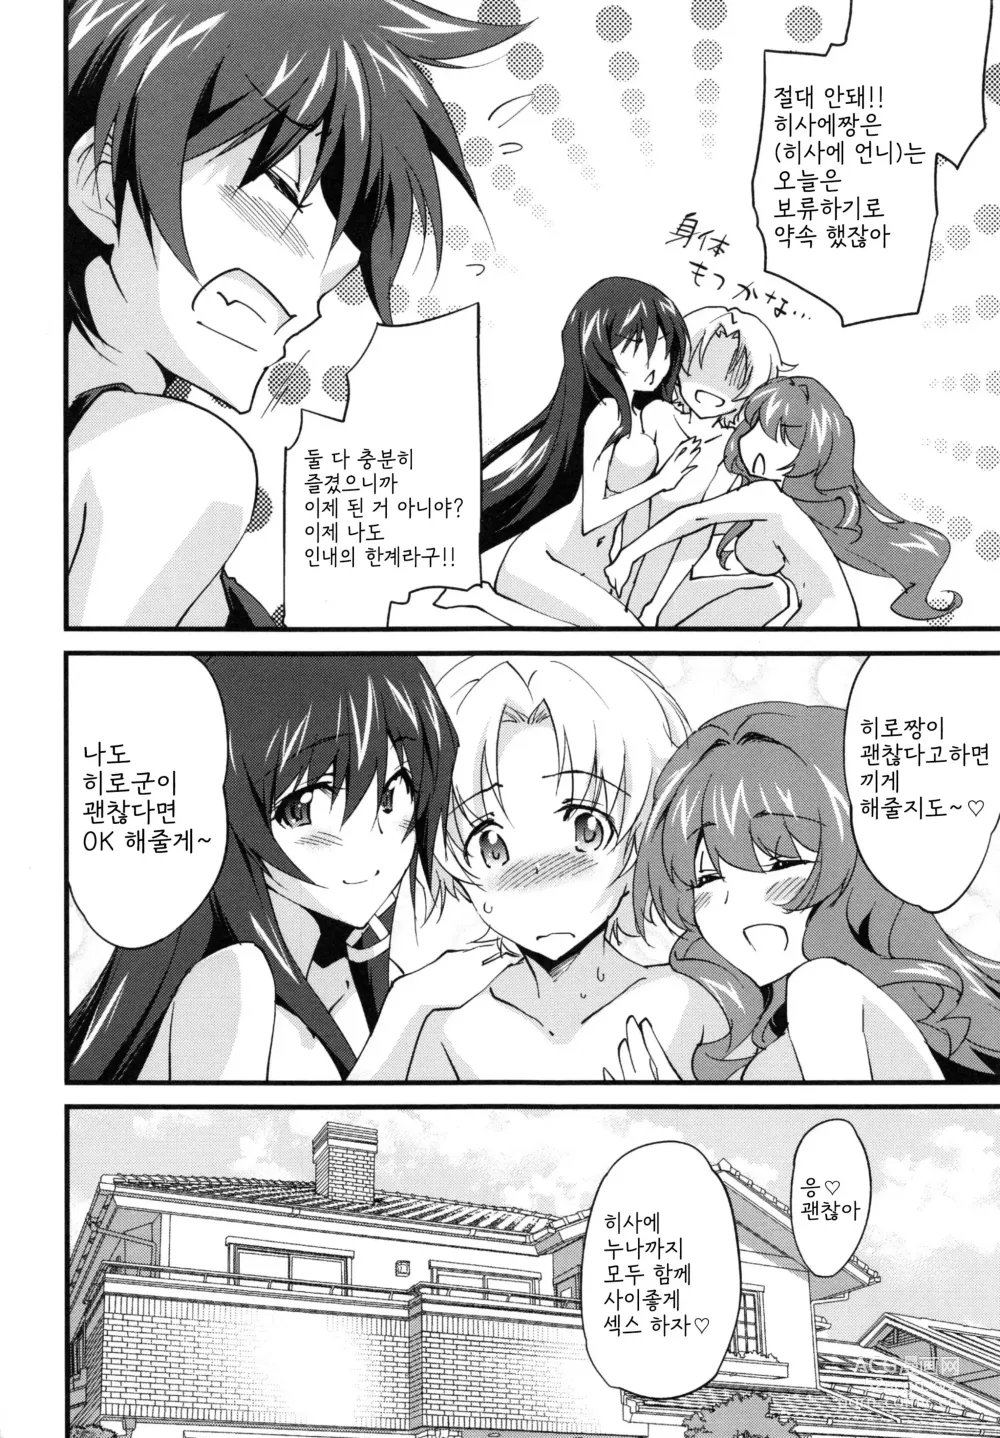 Page 212 of manga Onee-chan! Tengoku